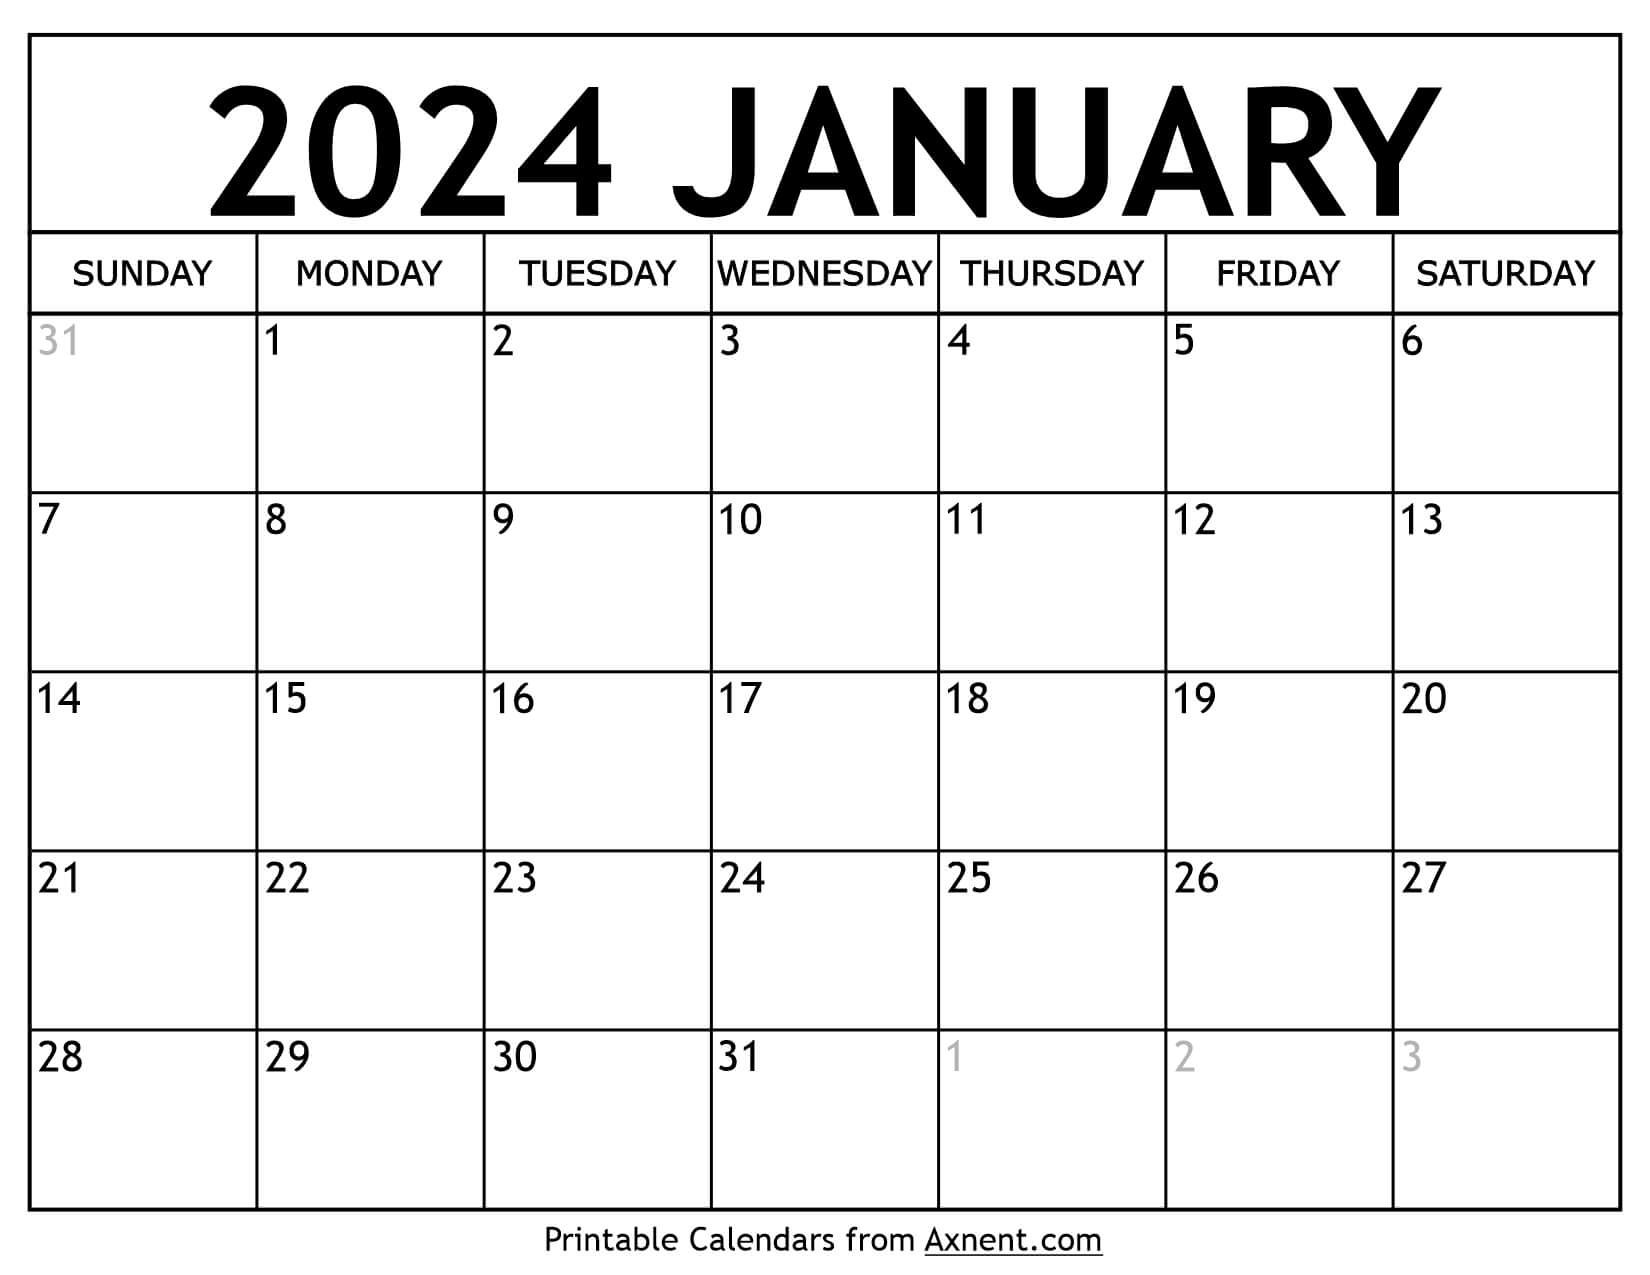 Printable January 2024 Calendar Template - Print Now for Calendar January 2024 Printable Free